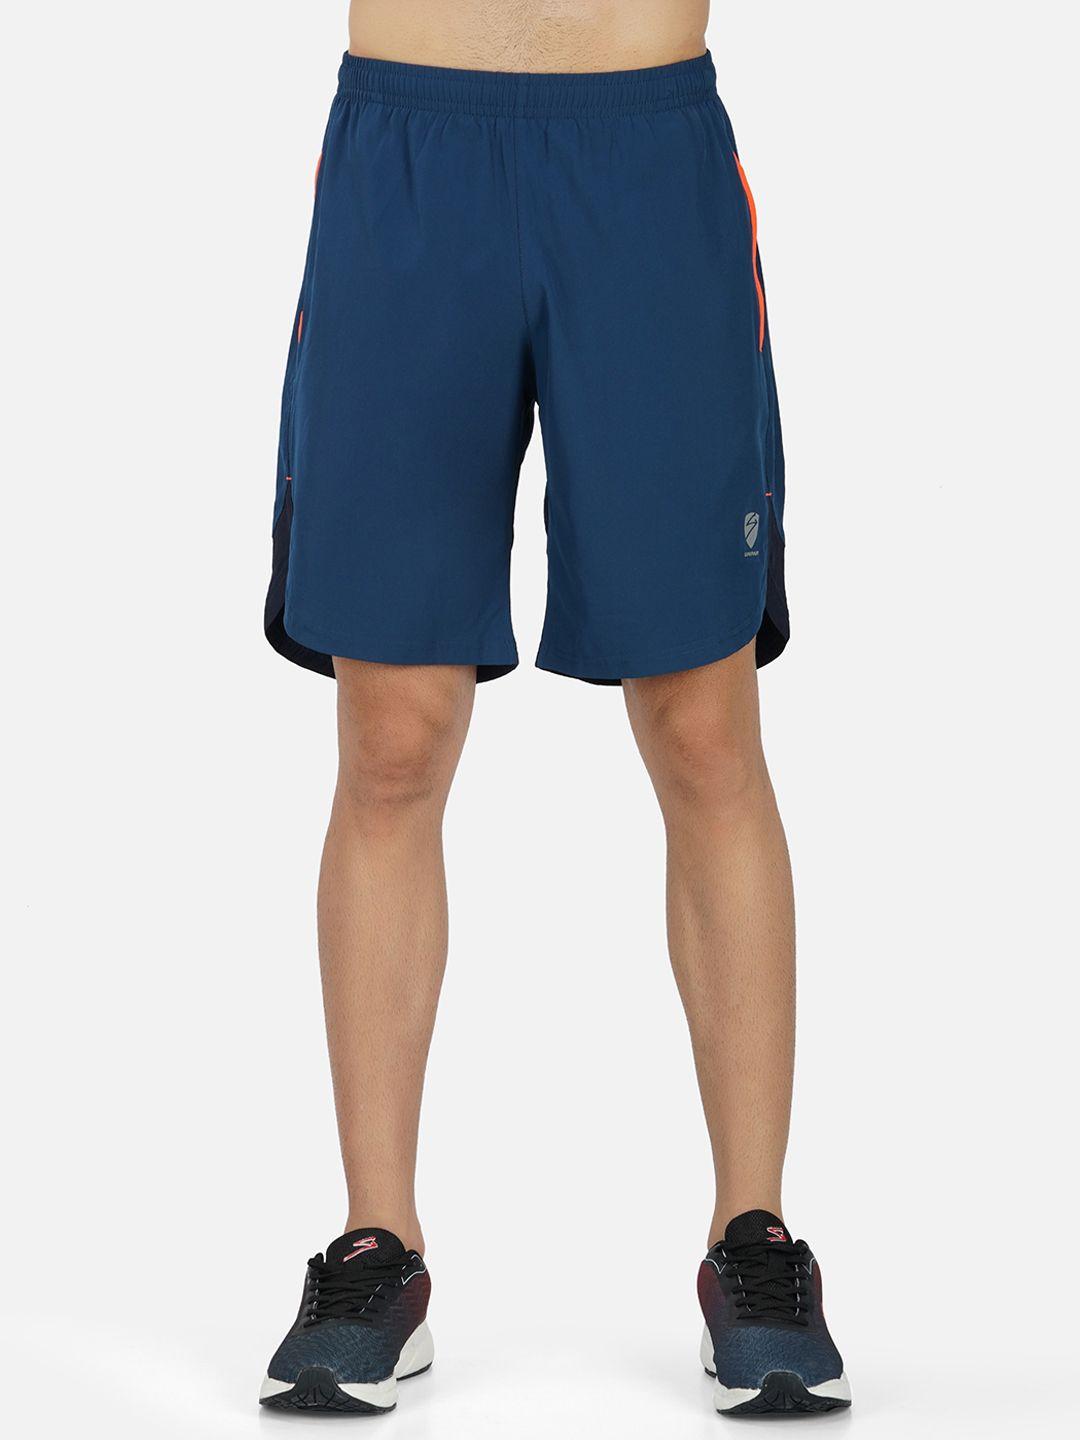 unpar men blue training or gym sports shorts